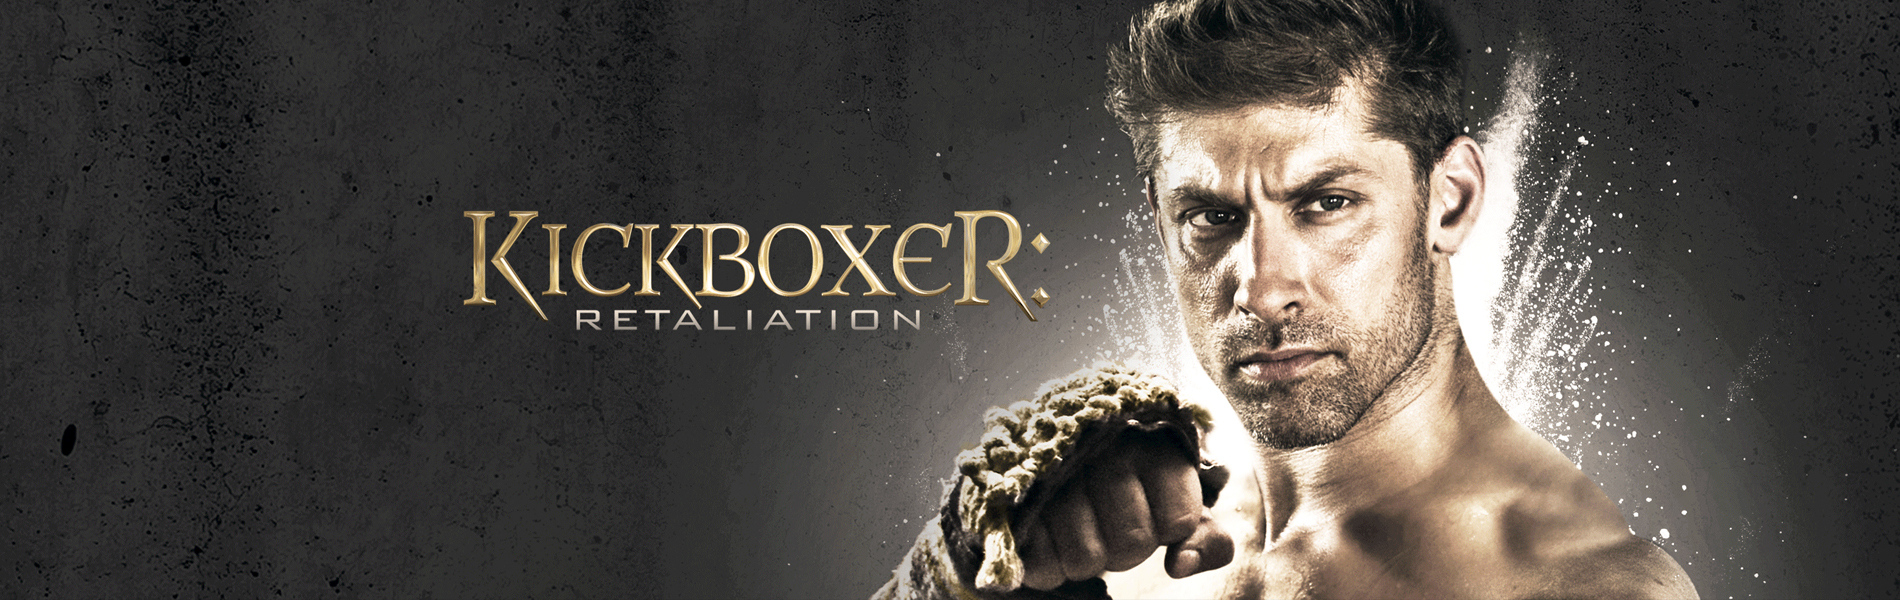 KICKBOXER: RETALIATION, Fight Clips + Trailer